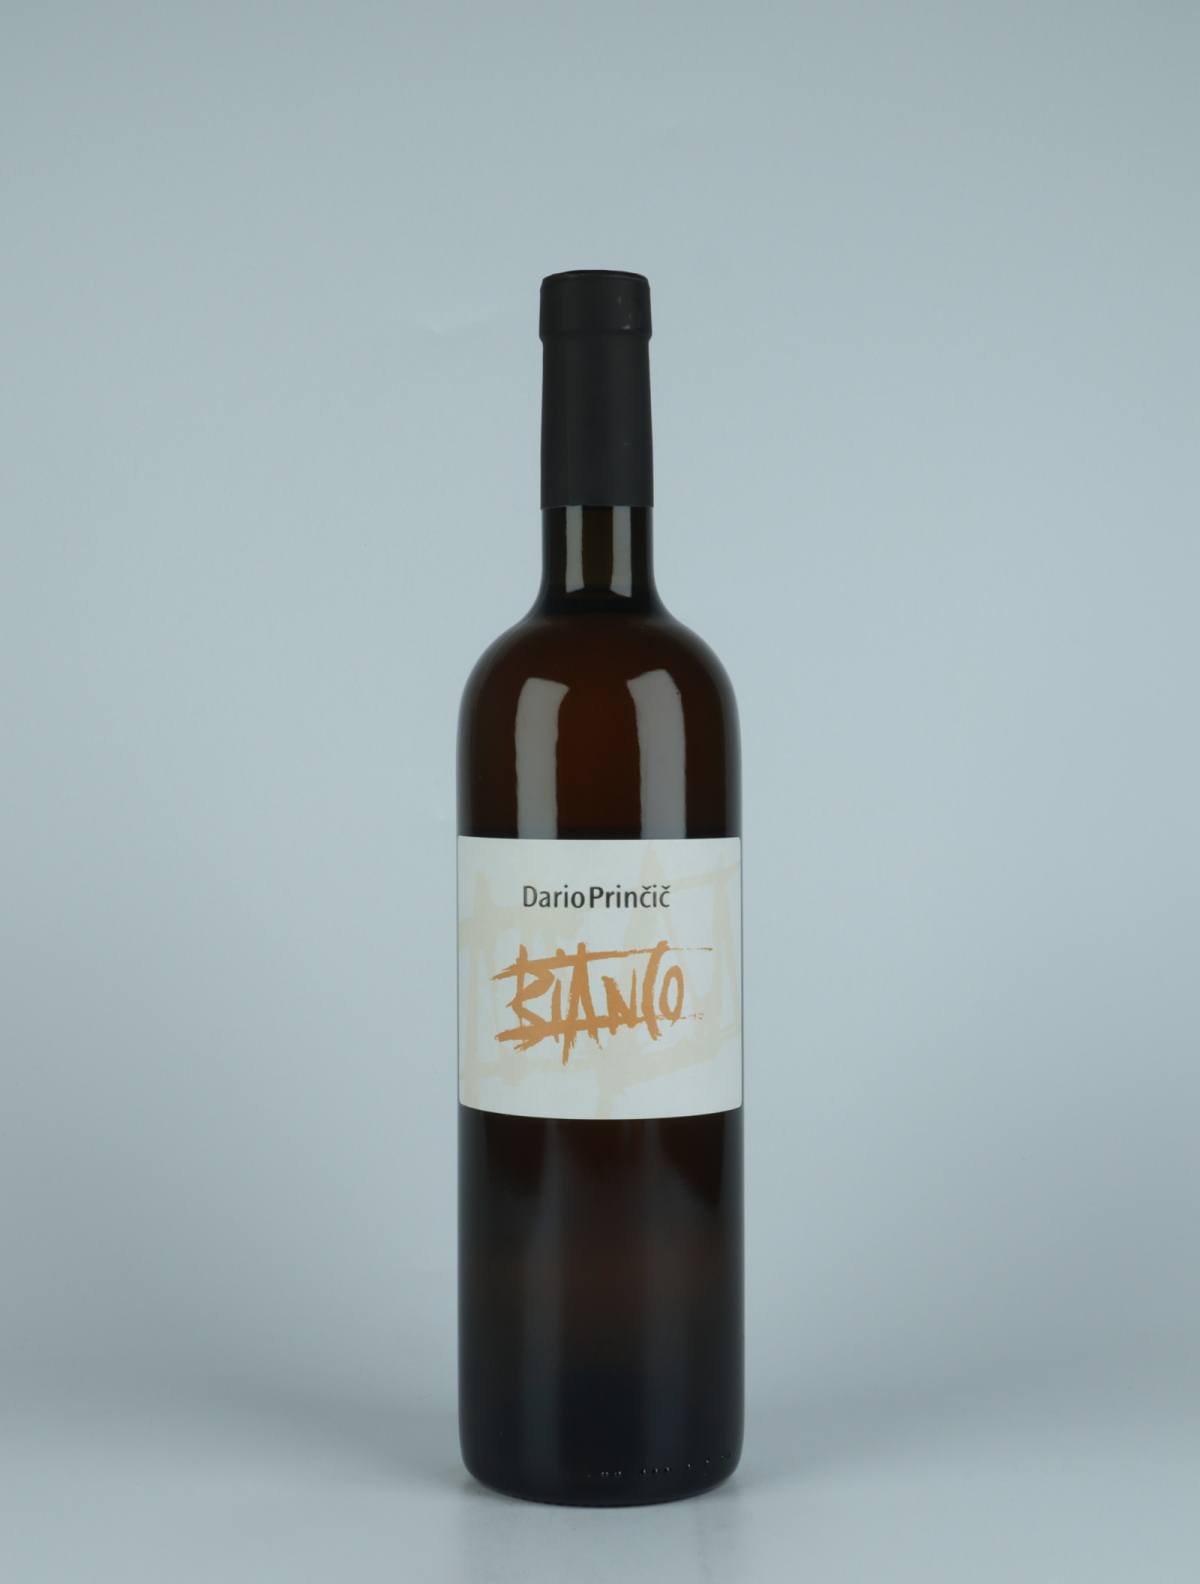 A bottle 2020 Bianco Orange wine from Dario Princic, Friuli in Italy